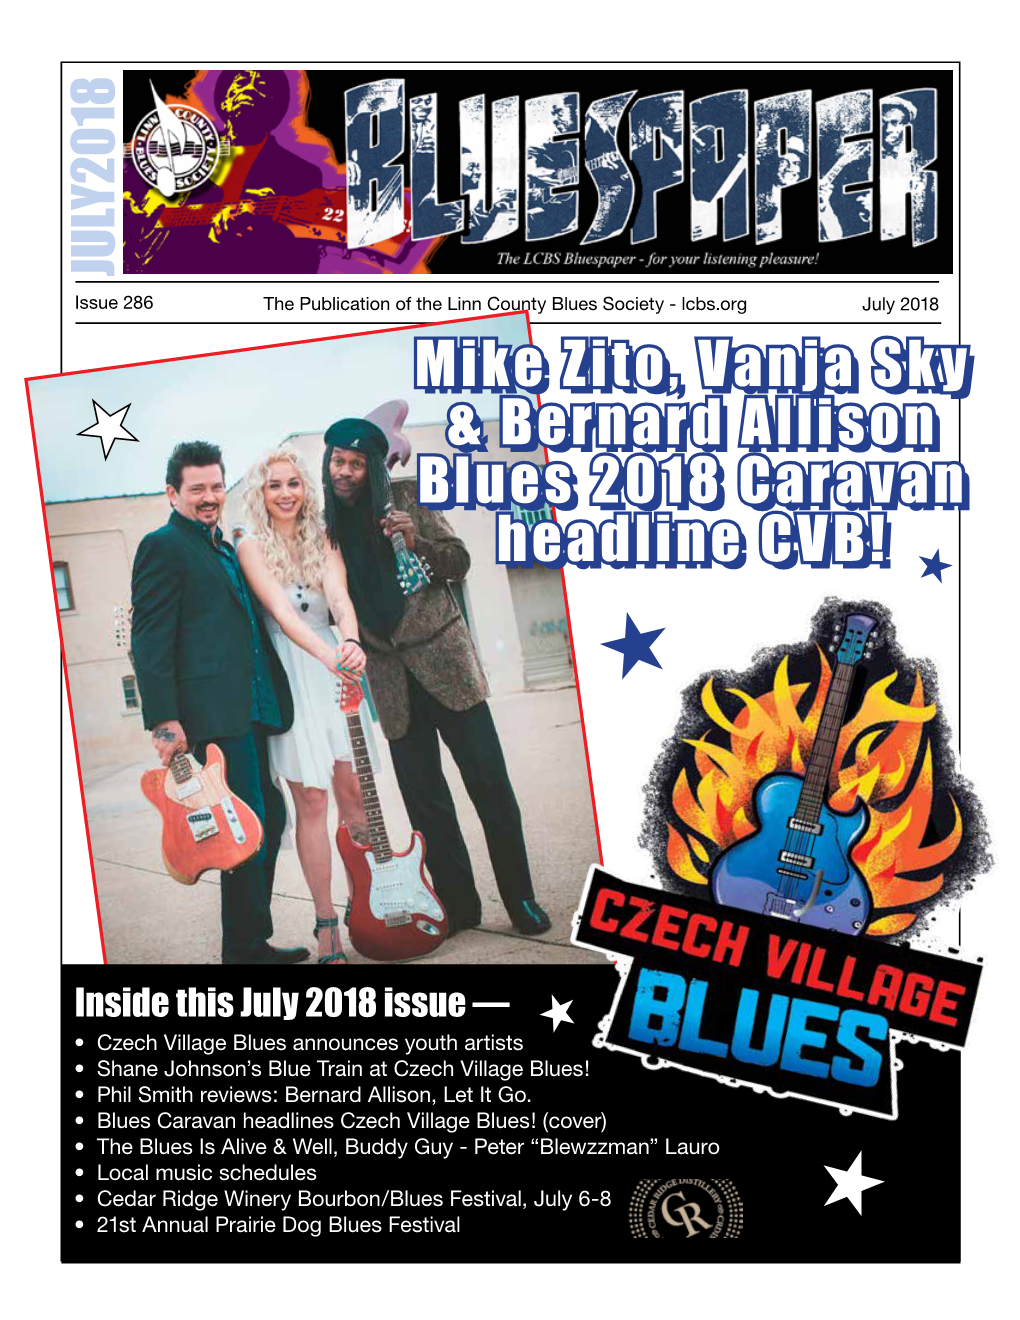 Mike Zito, Vanja Sky & Bernard Allison Blues